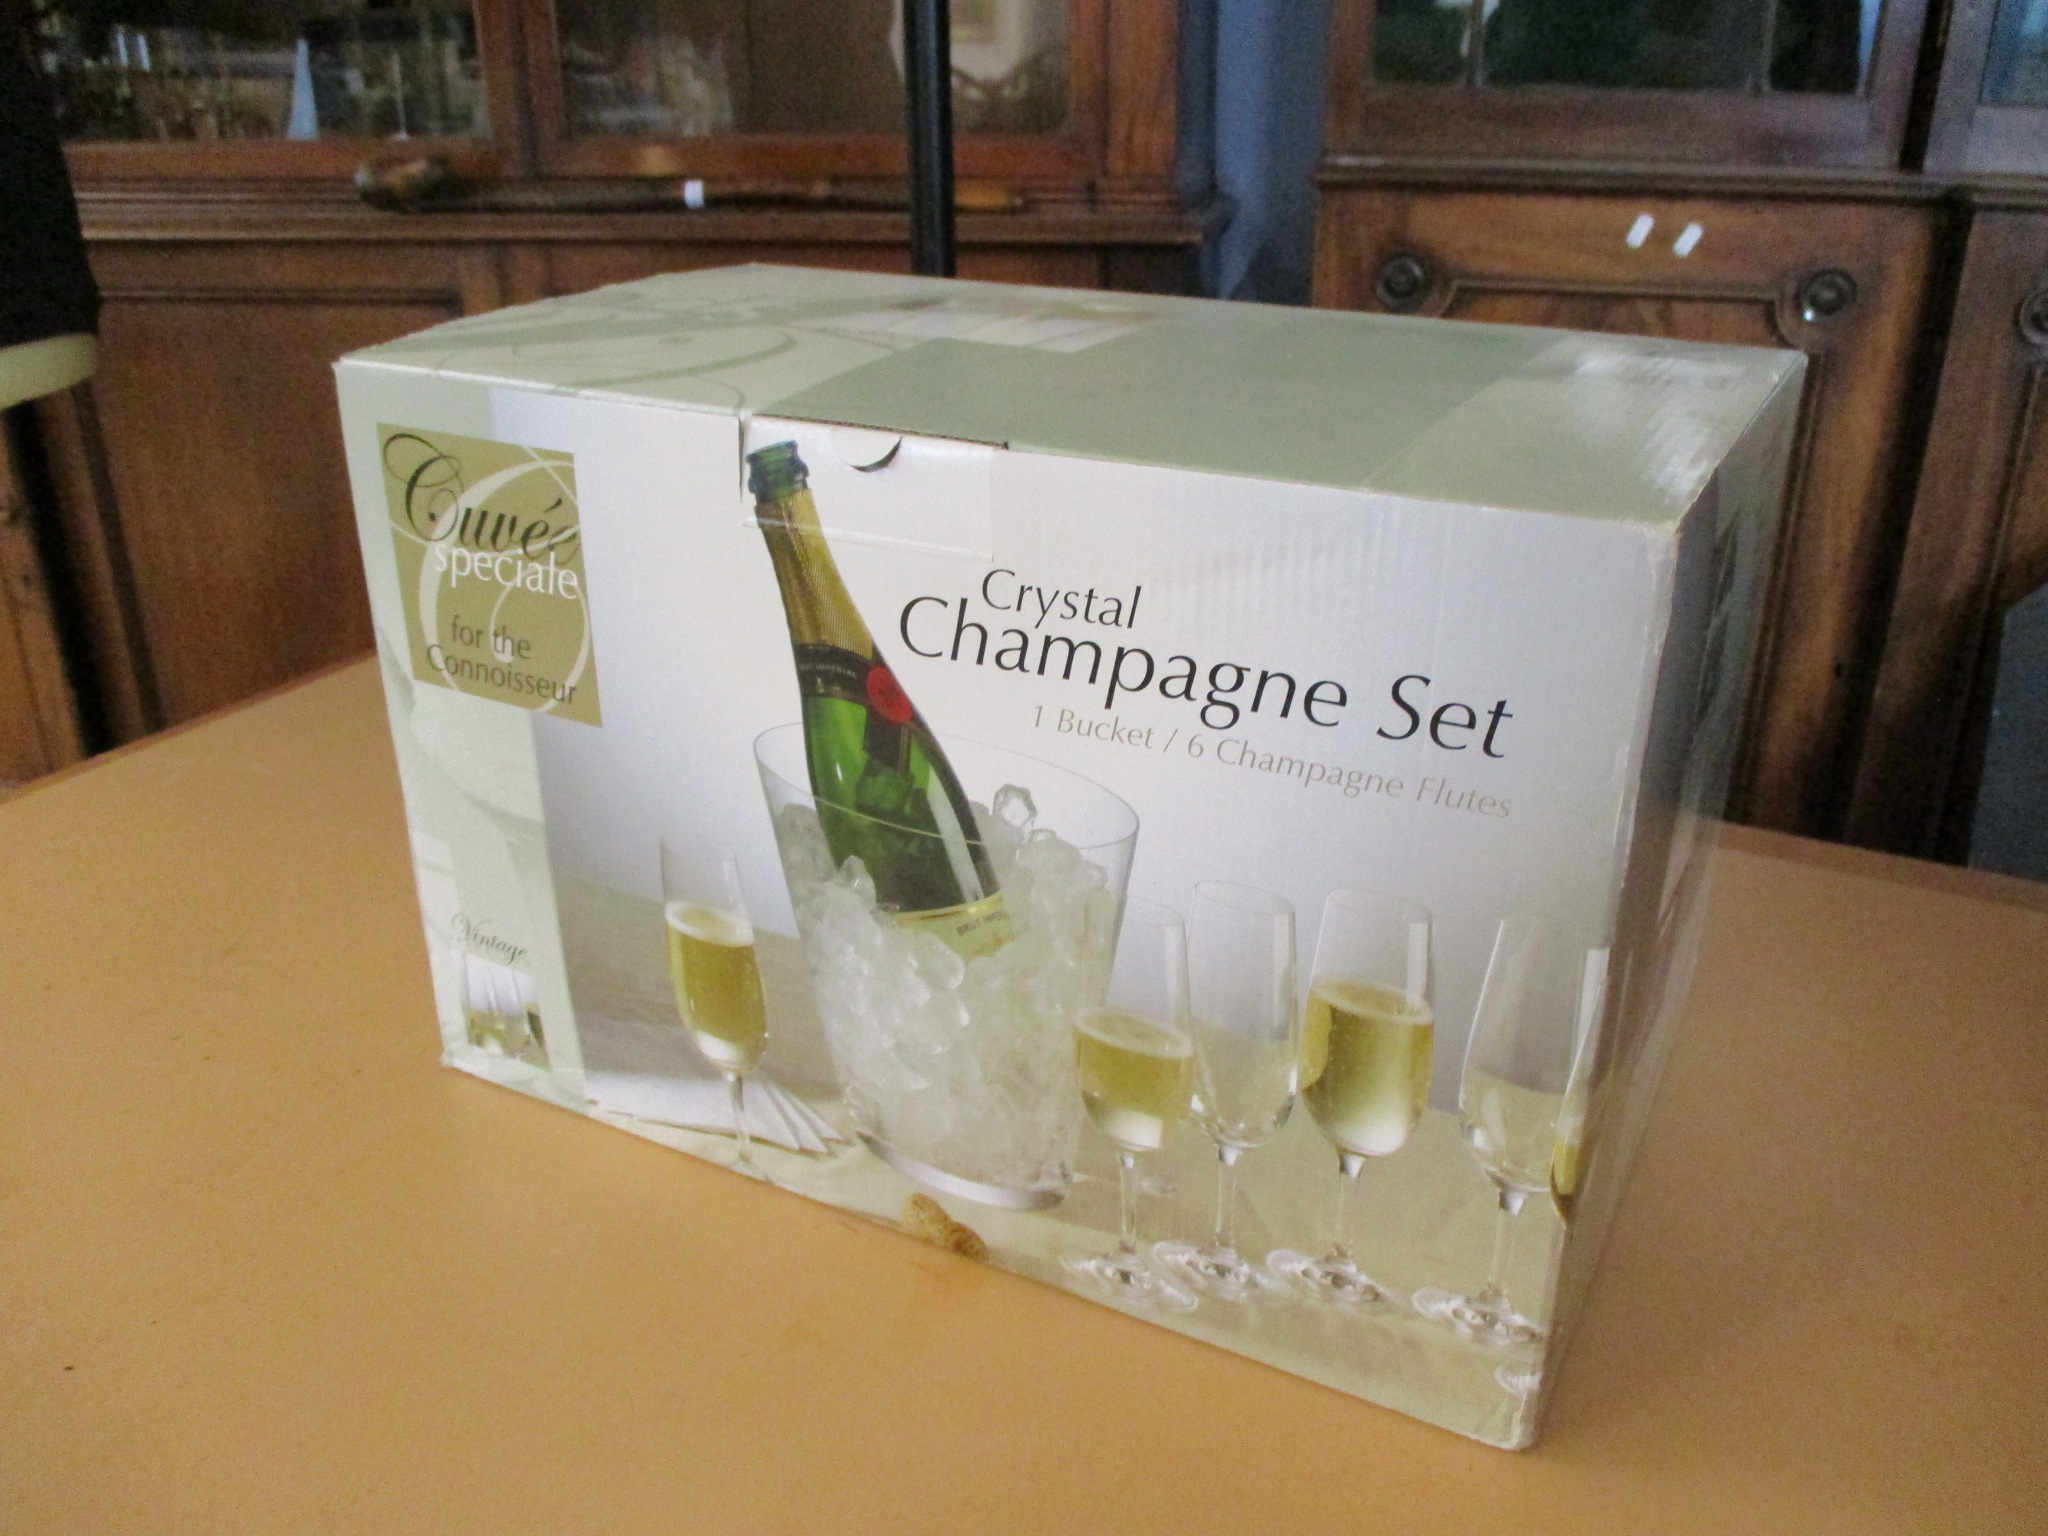 Crystal Champagne Set: 1 x Bucket & 6 x Champagne Flutes, 1 bottle